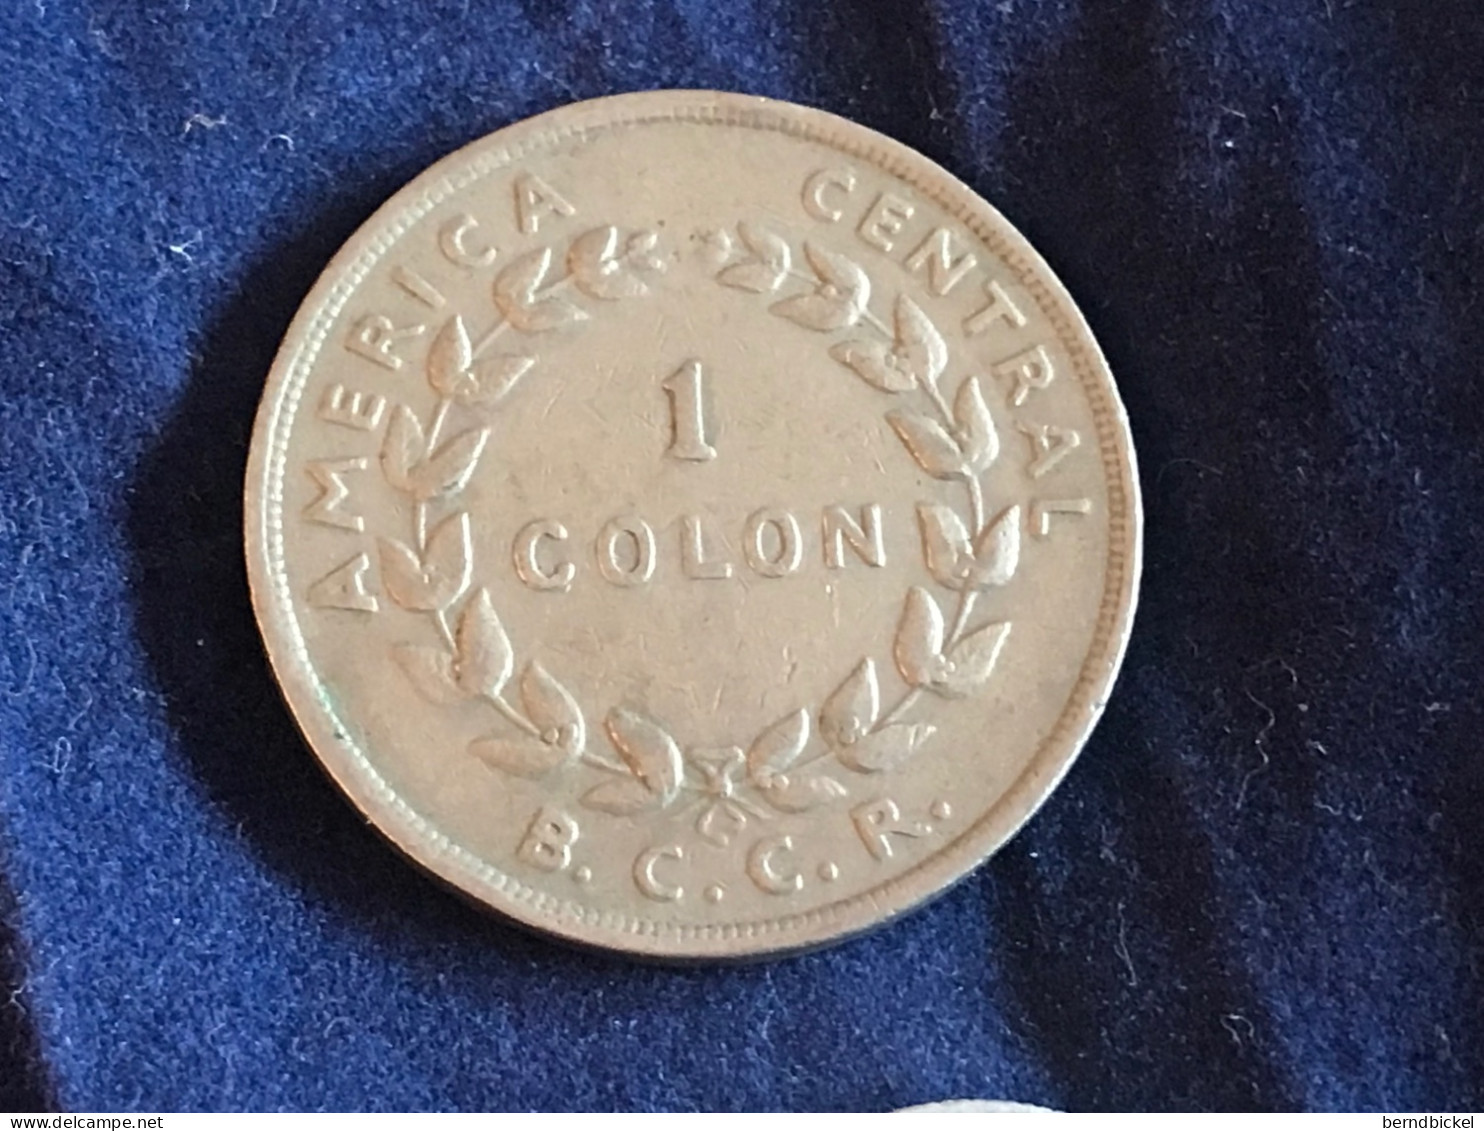 Münze Münzen Umlaufmünze Costa Rica 1 Colon 1970 - Costa Rica